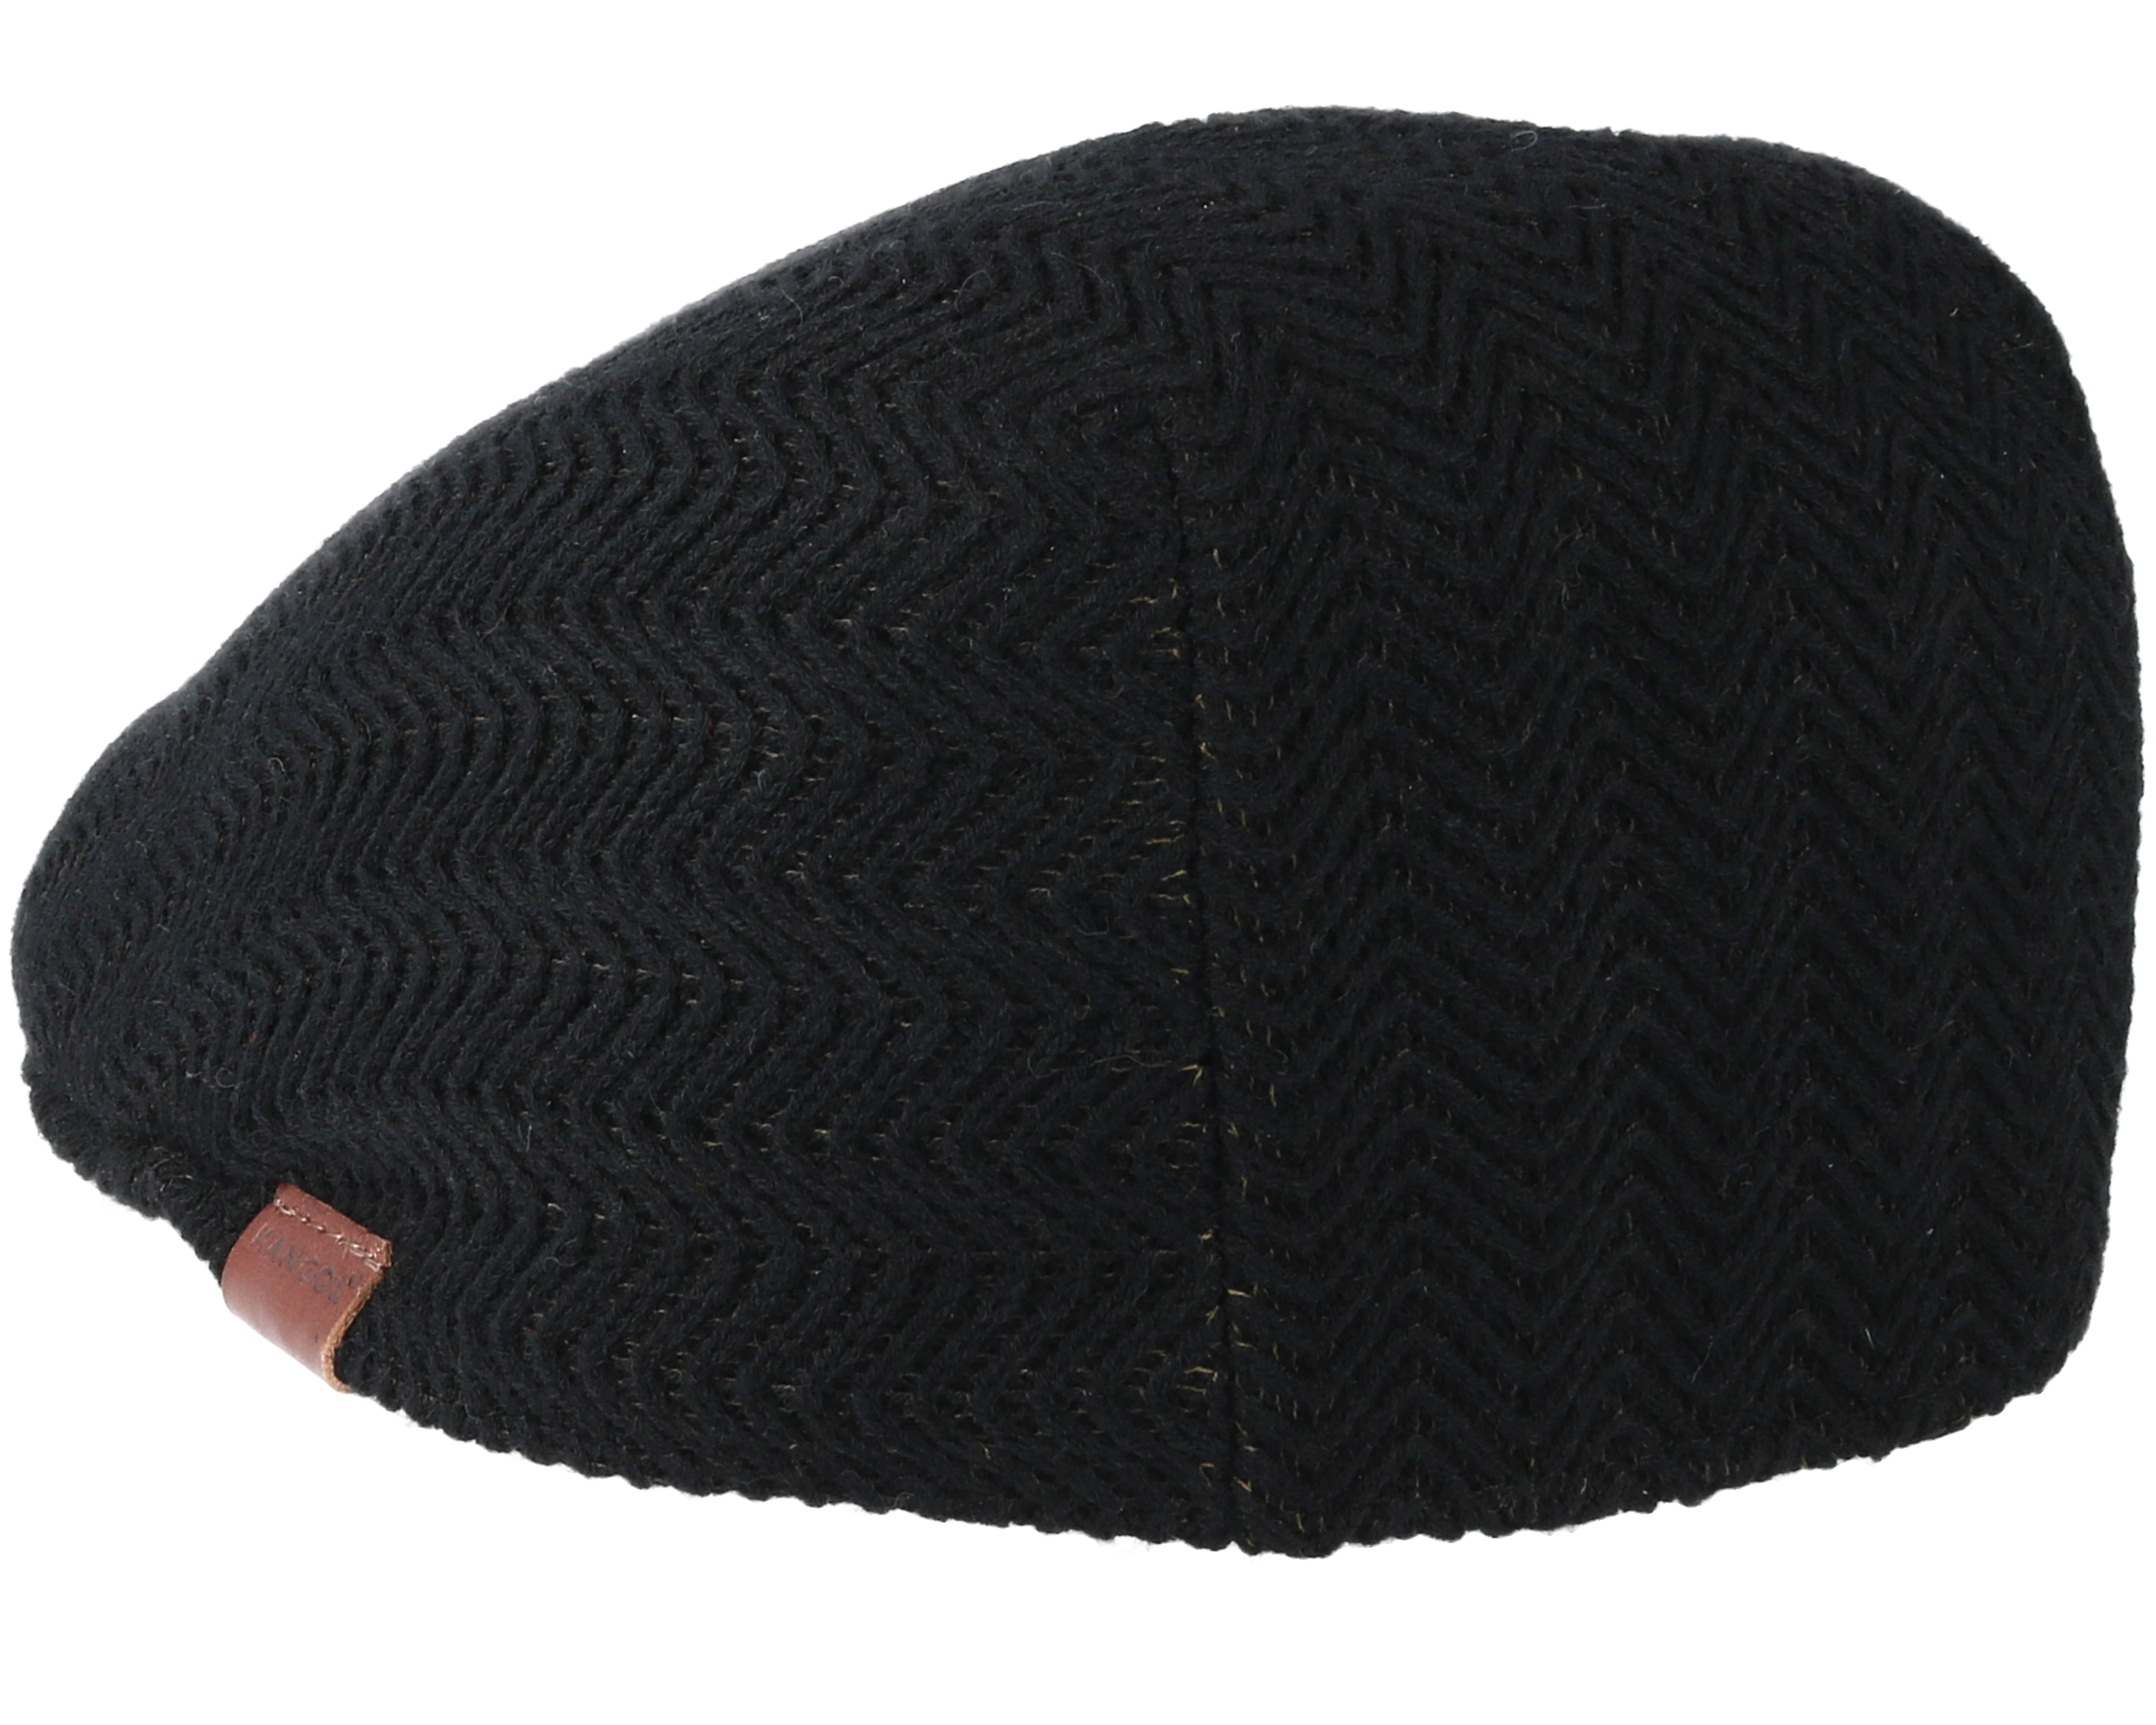 Herringbone Rib 507 Black Flat Cap - Kangol caps | Hatstore.co.uk